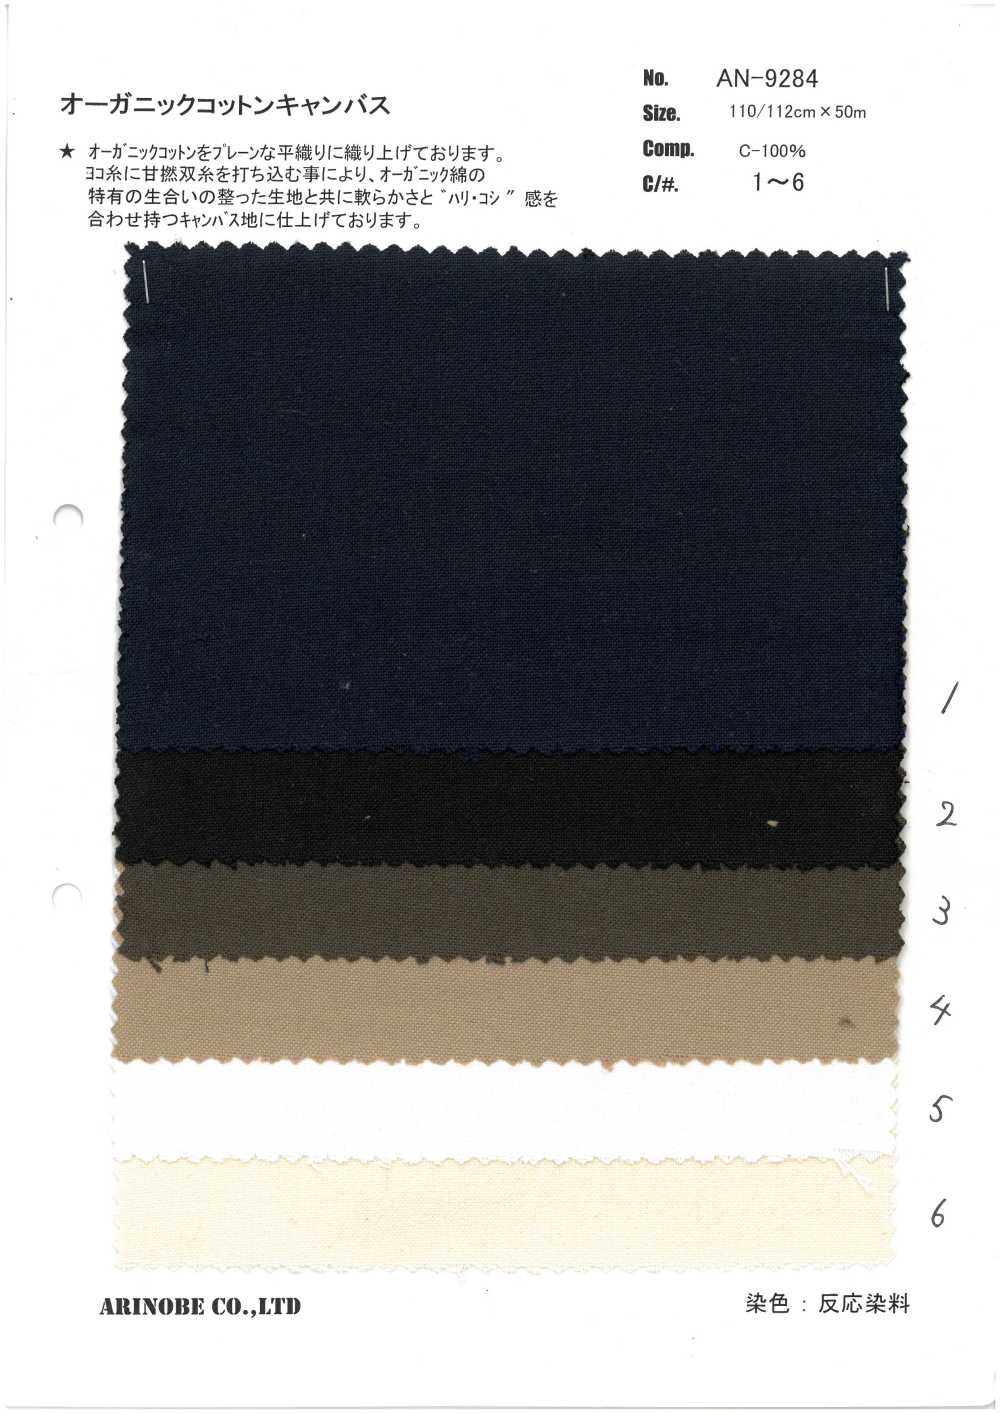 AN-9284 Leinwand Aus Bio-Baumwolle[Textilgewebe] ARINOBE CO., LTD.